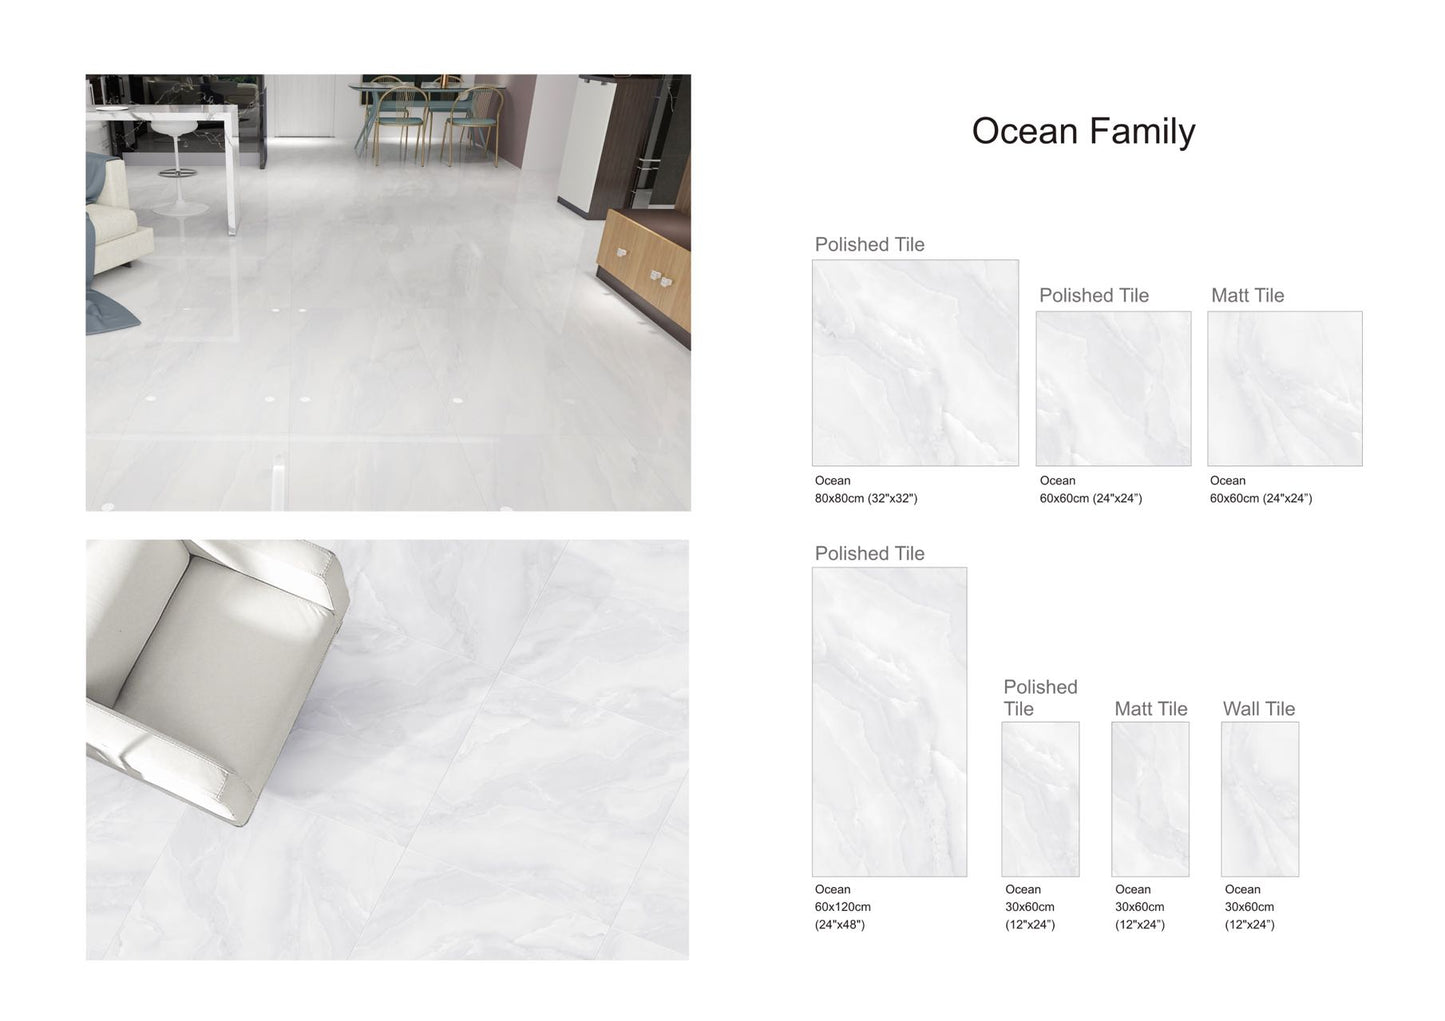 Ocean family Ceramic Wall Tile light gray 12"x24" 8pcs/box 16sf/box $22.24/box $1.39/sf (15 days return/exchange) Bulk Deal 1000sf+ $1.19/SF(No return/no exchange)